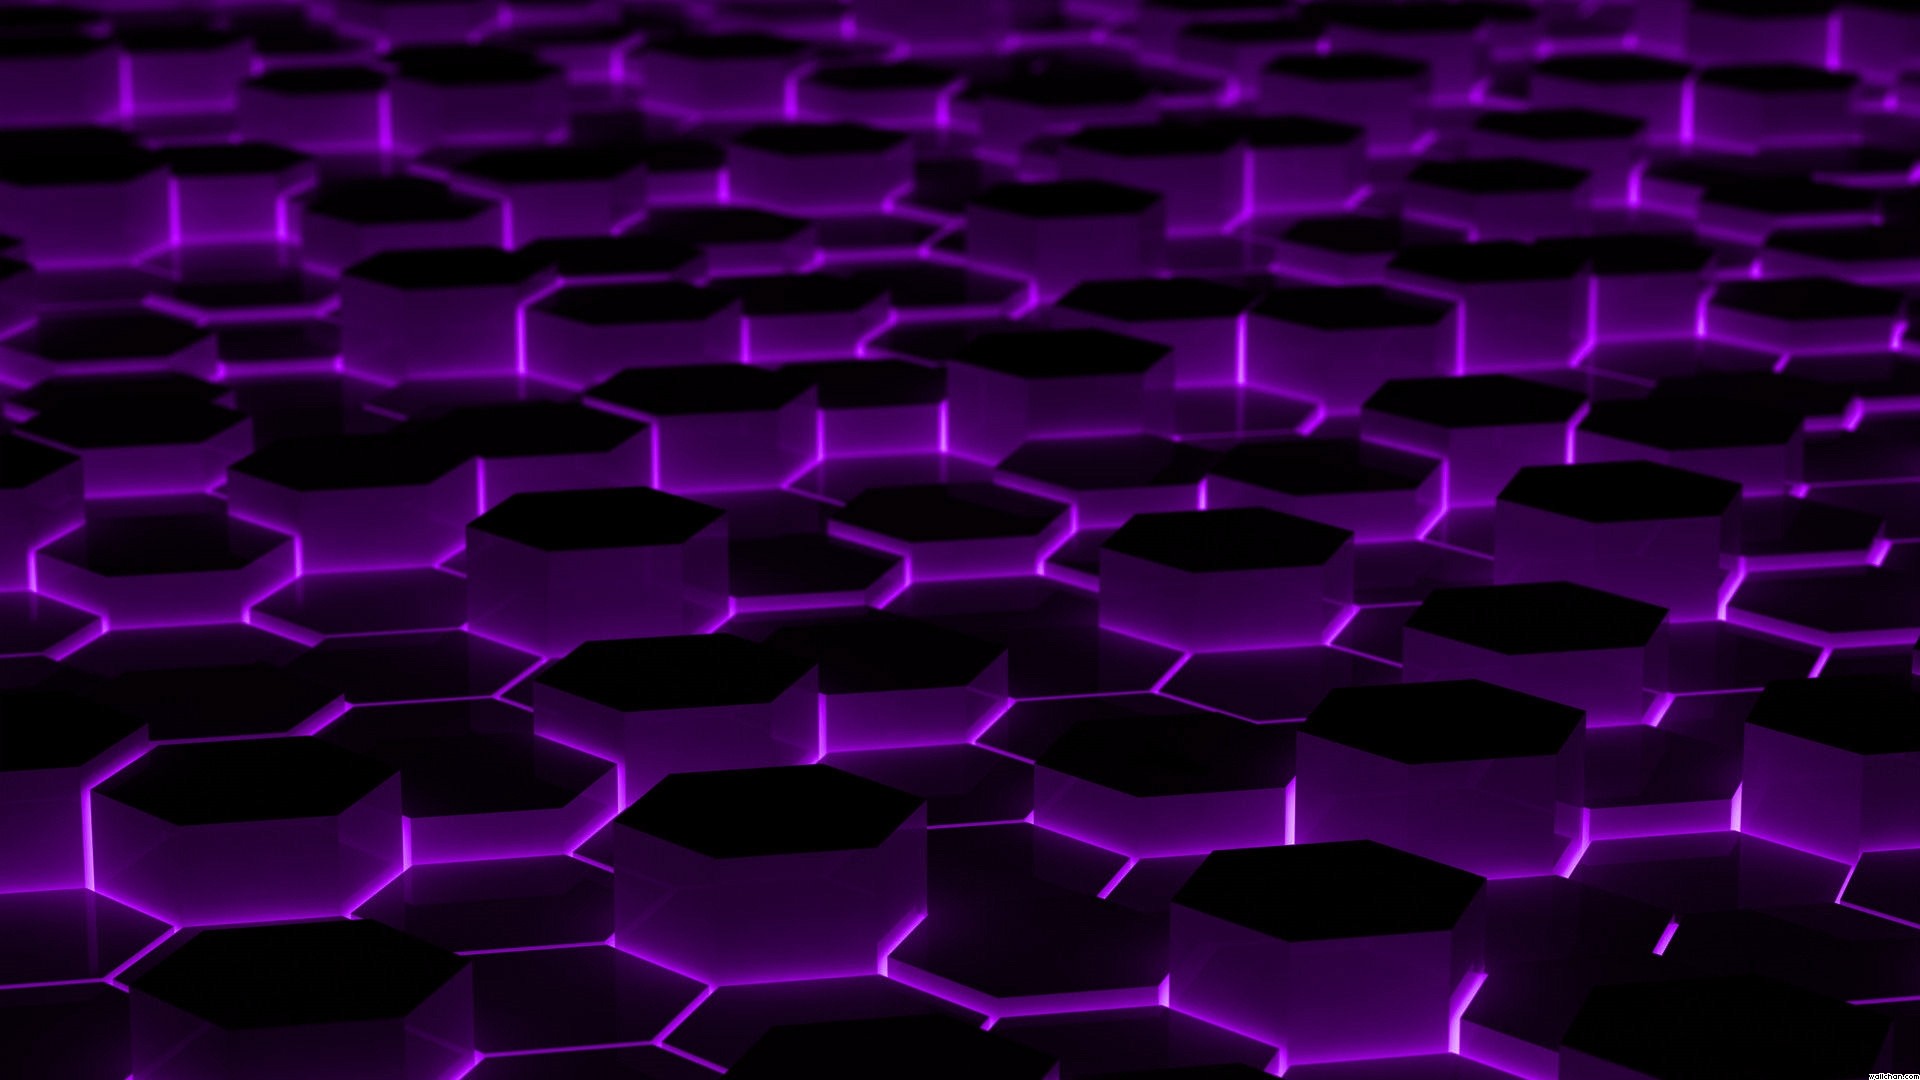 Top 999+ Kawaii Purple Wallpaper Full HD, 4K✓Free to Use